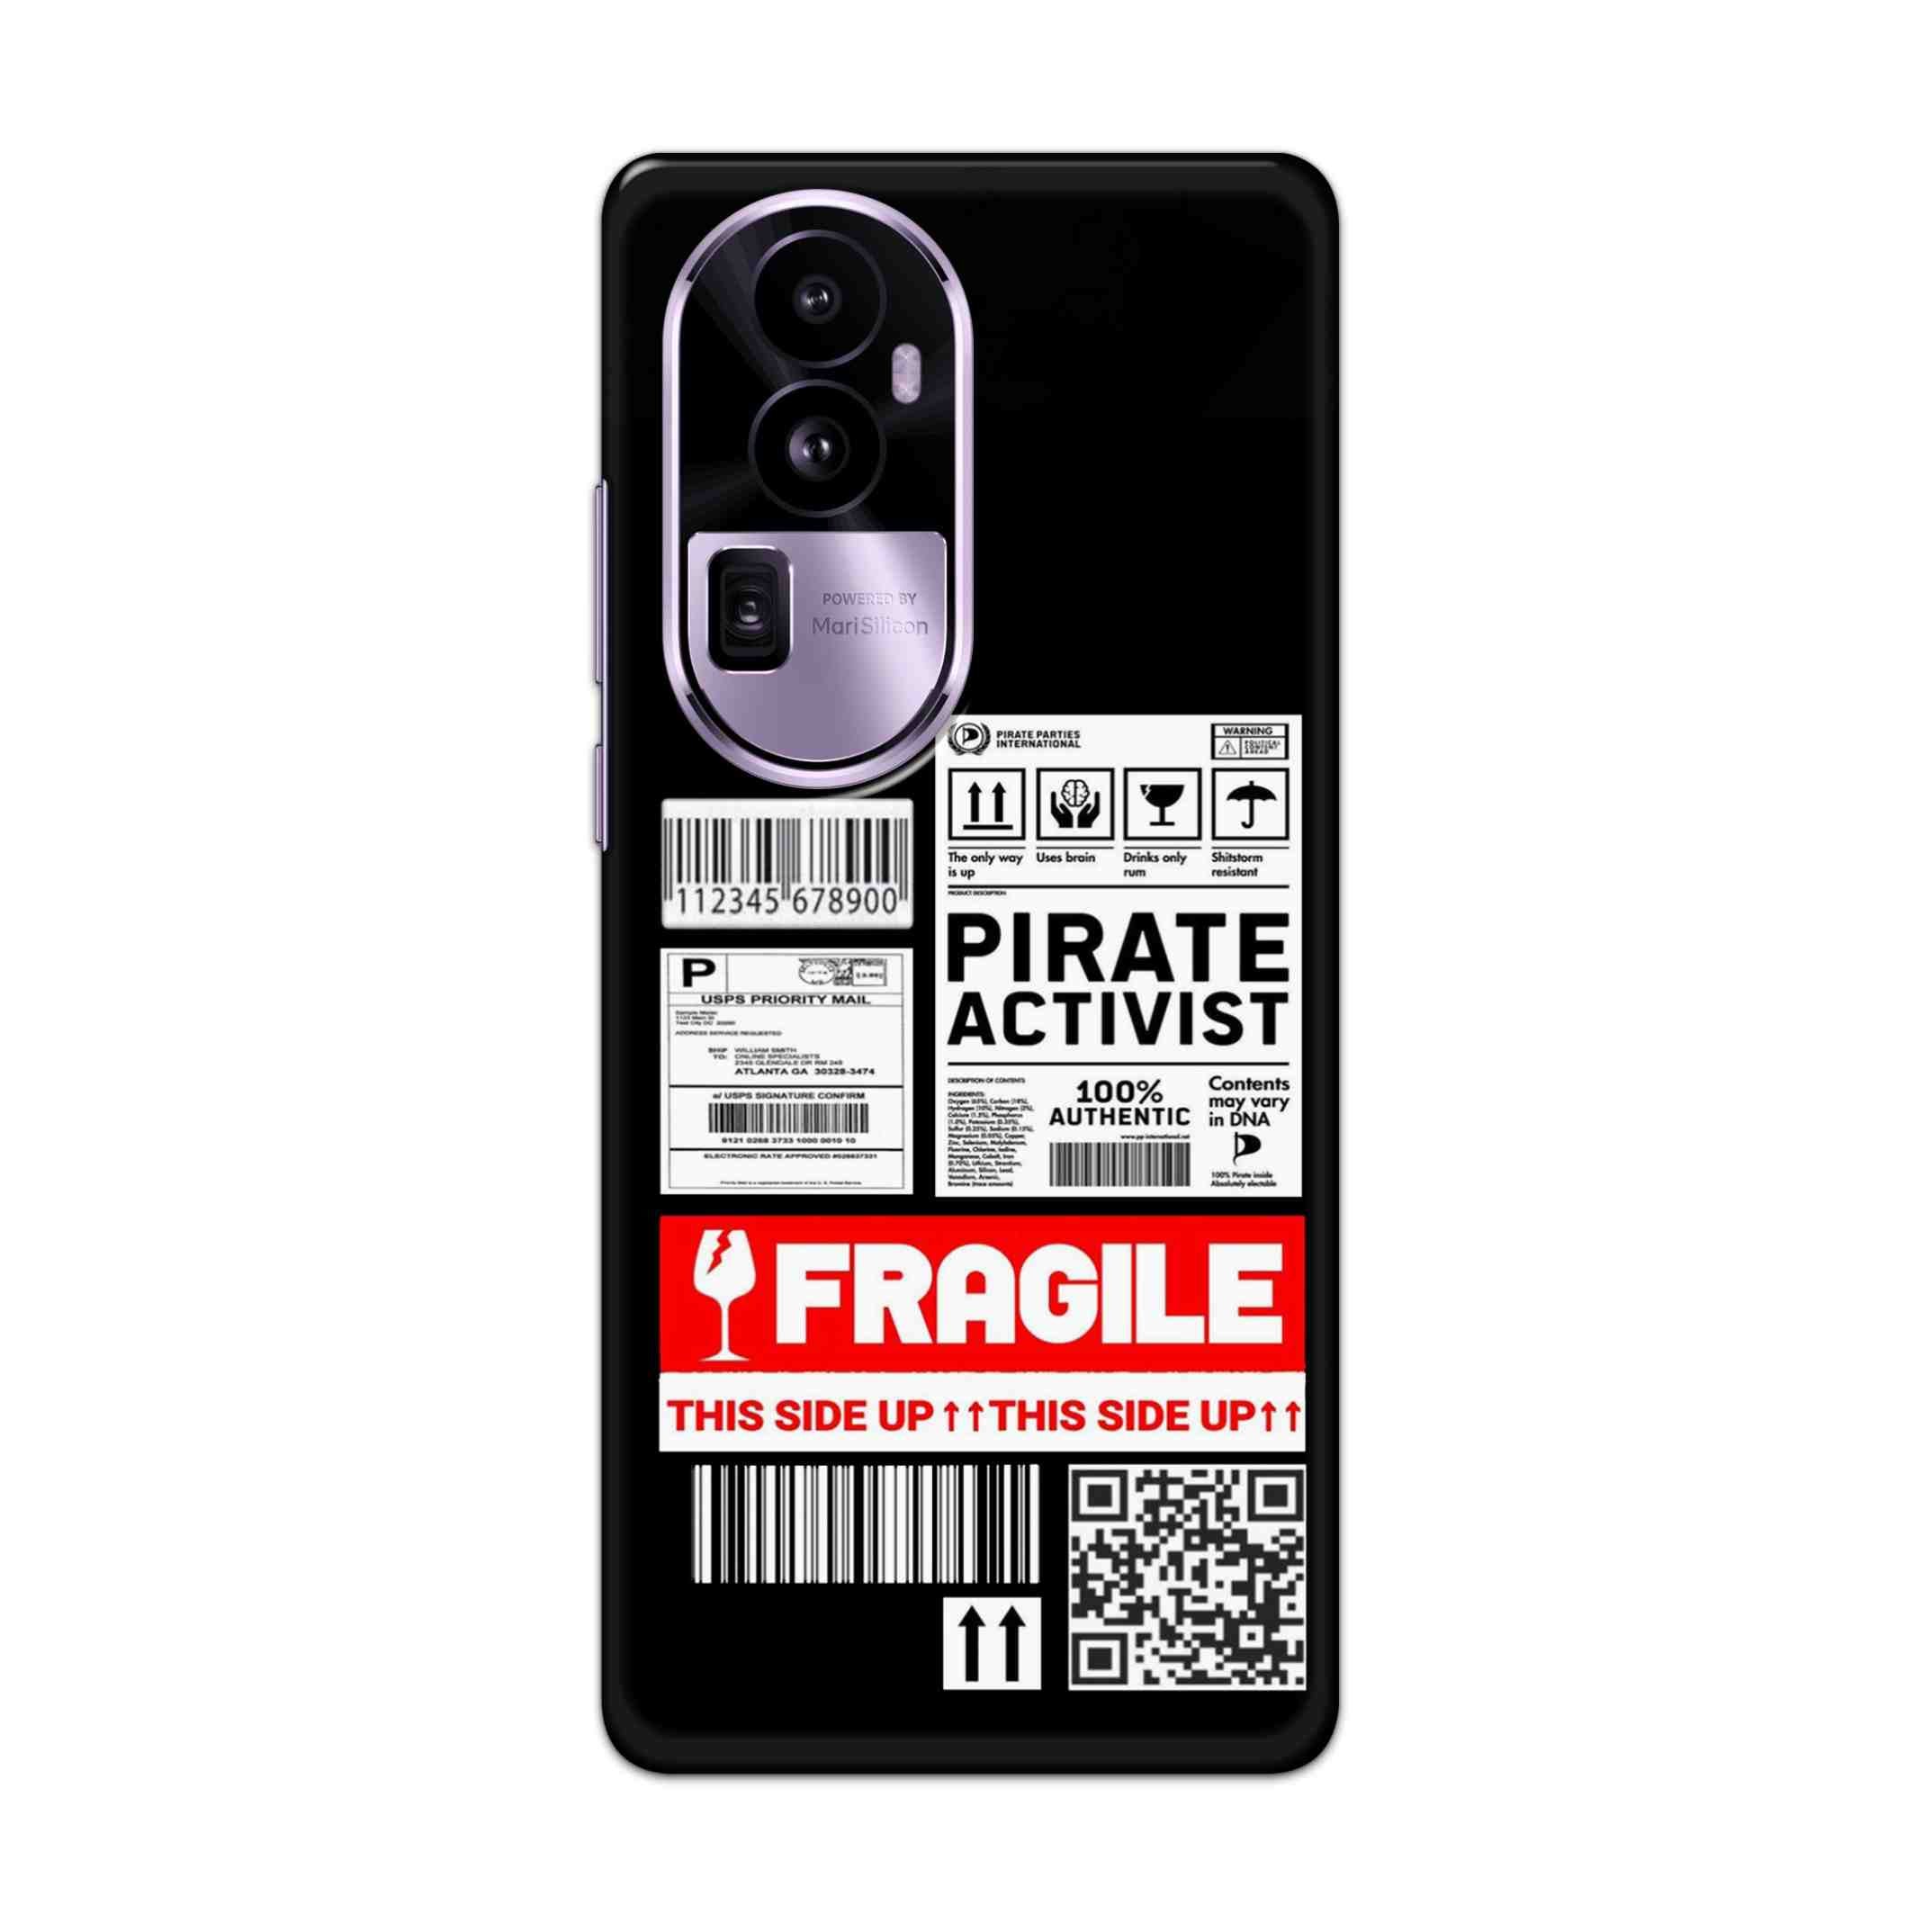 Buy Fragile Hard Back Mobile Phone Case Cover For Oppo Reno 10 Pro Plus Online